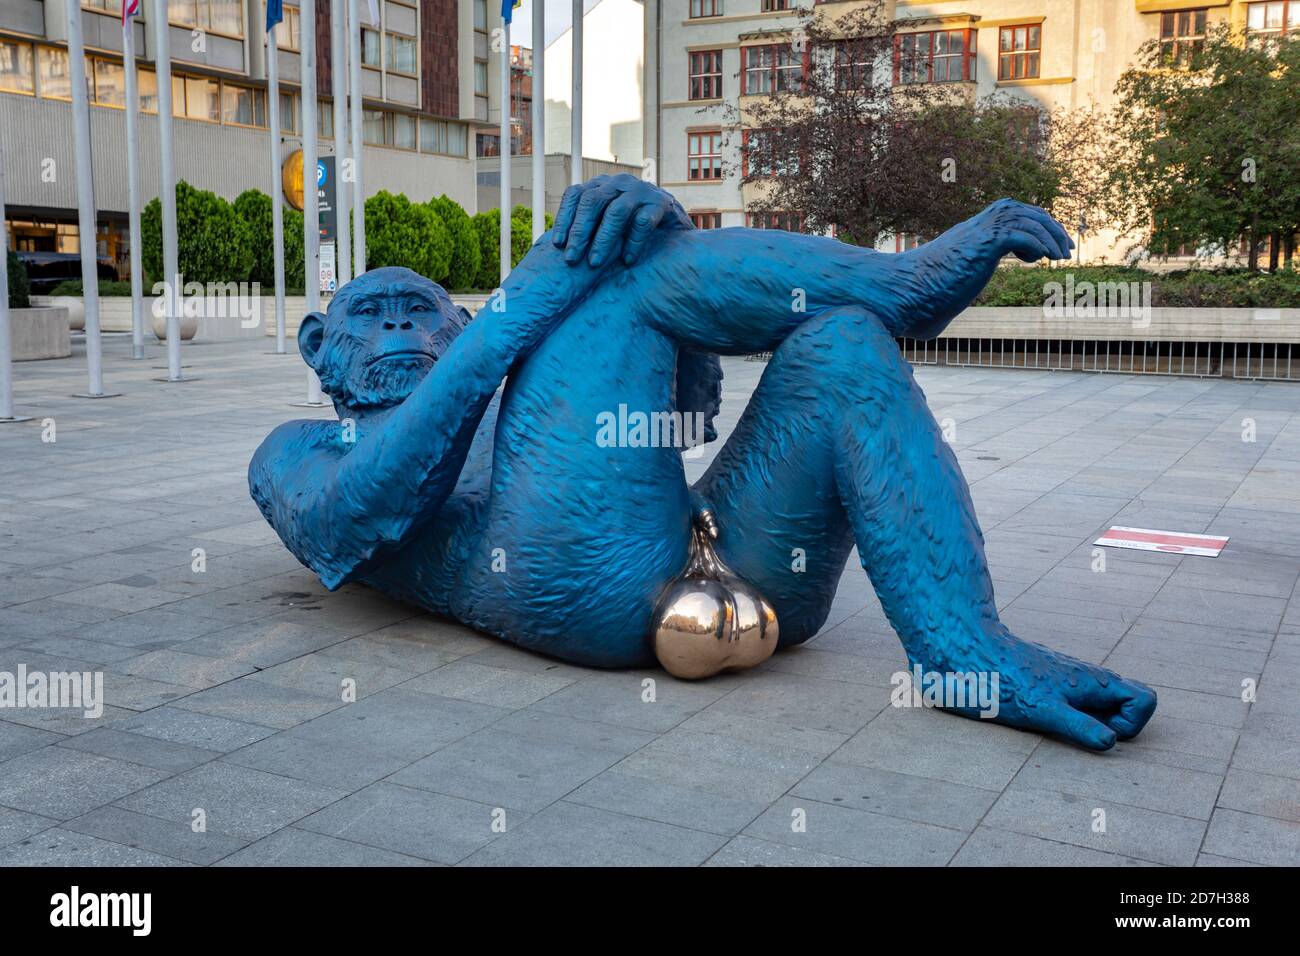 Skulptur "King Kong Balls" von Denis Defrancesco in Prag, Tschechische  Republik Stockfotografie - Alamy